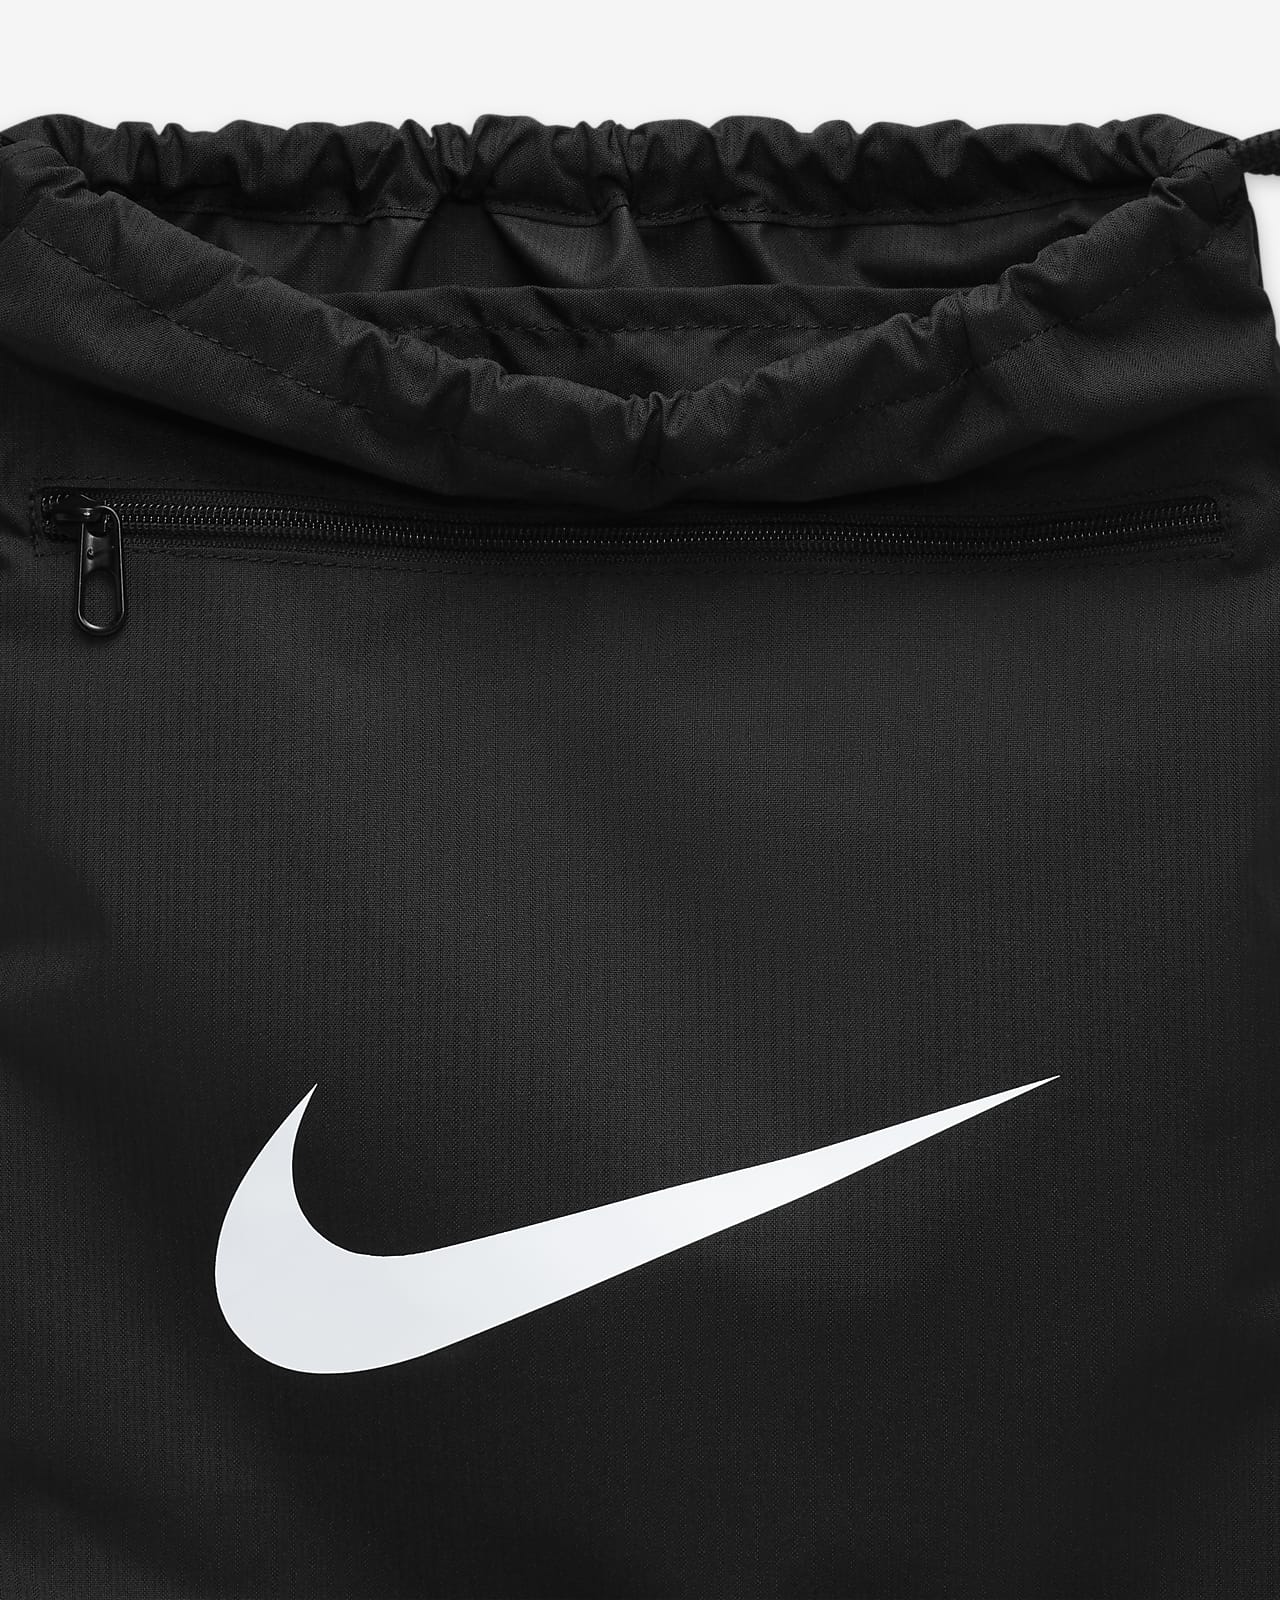 Bolsa de deporte pequeña - Nike Brasilia - BA5961-026